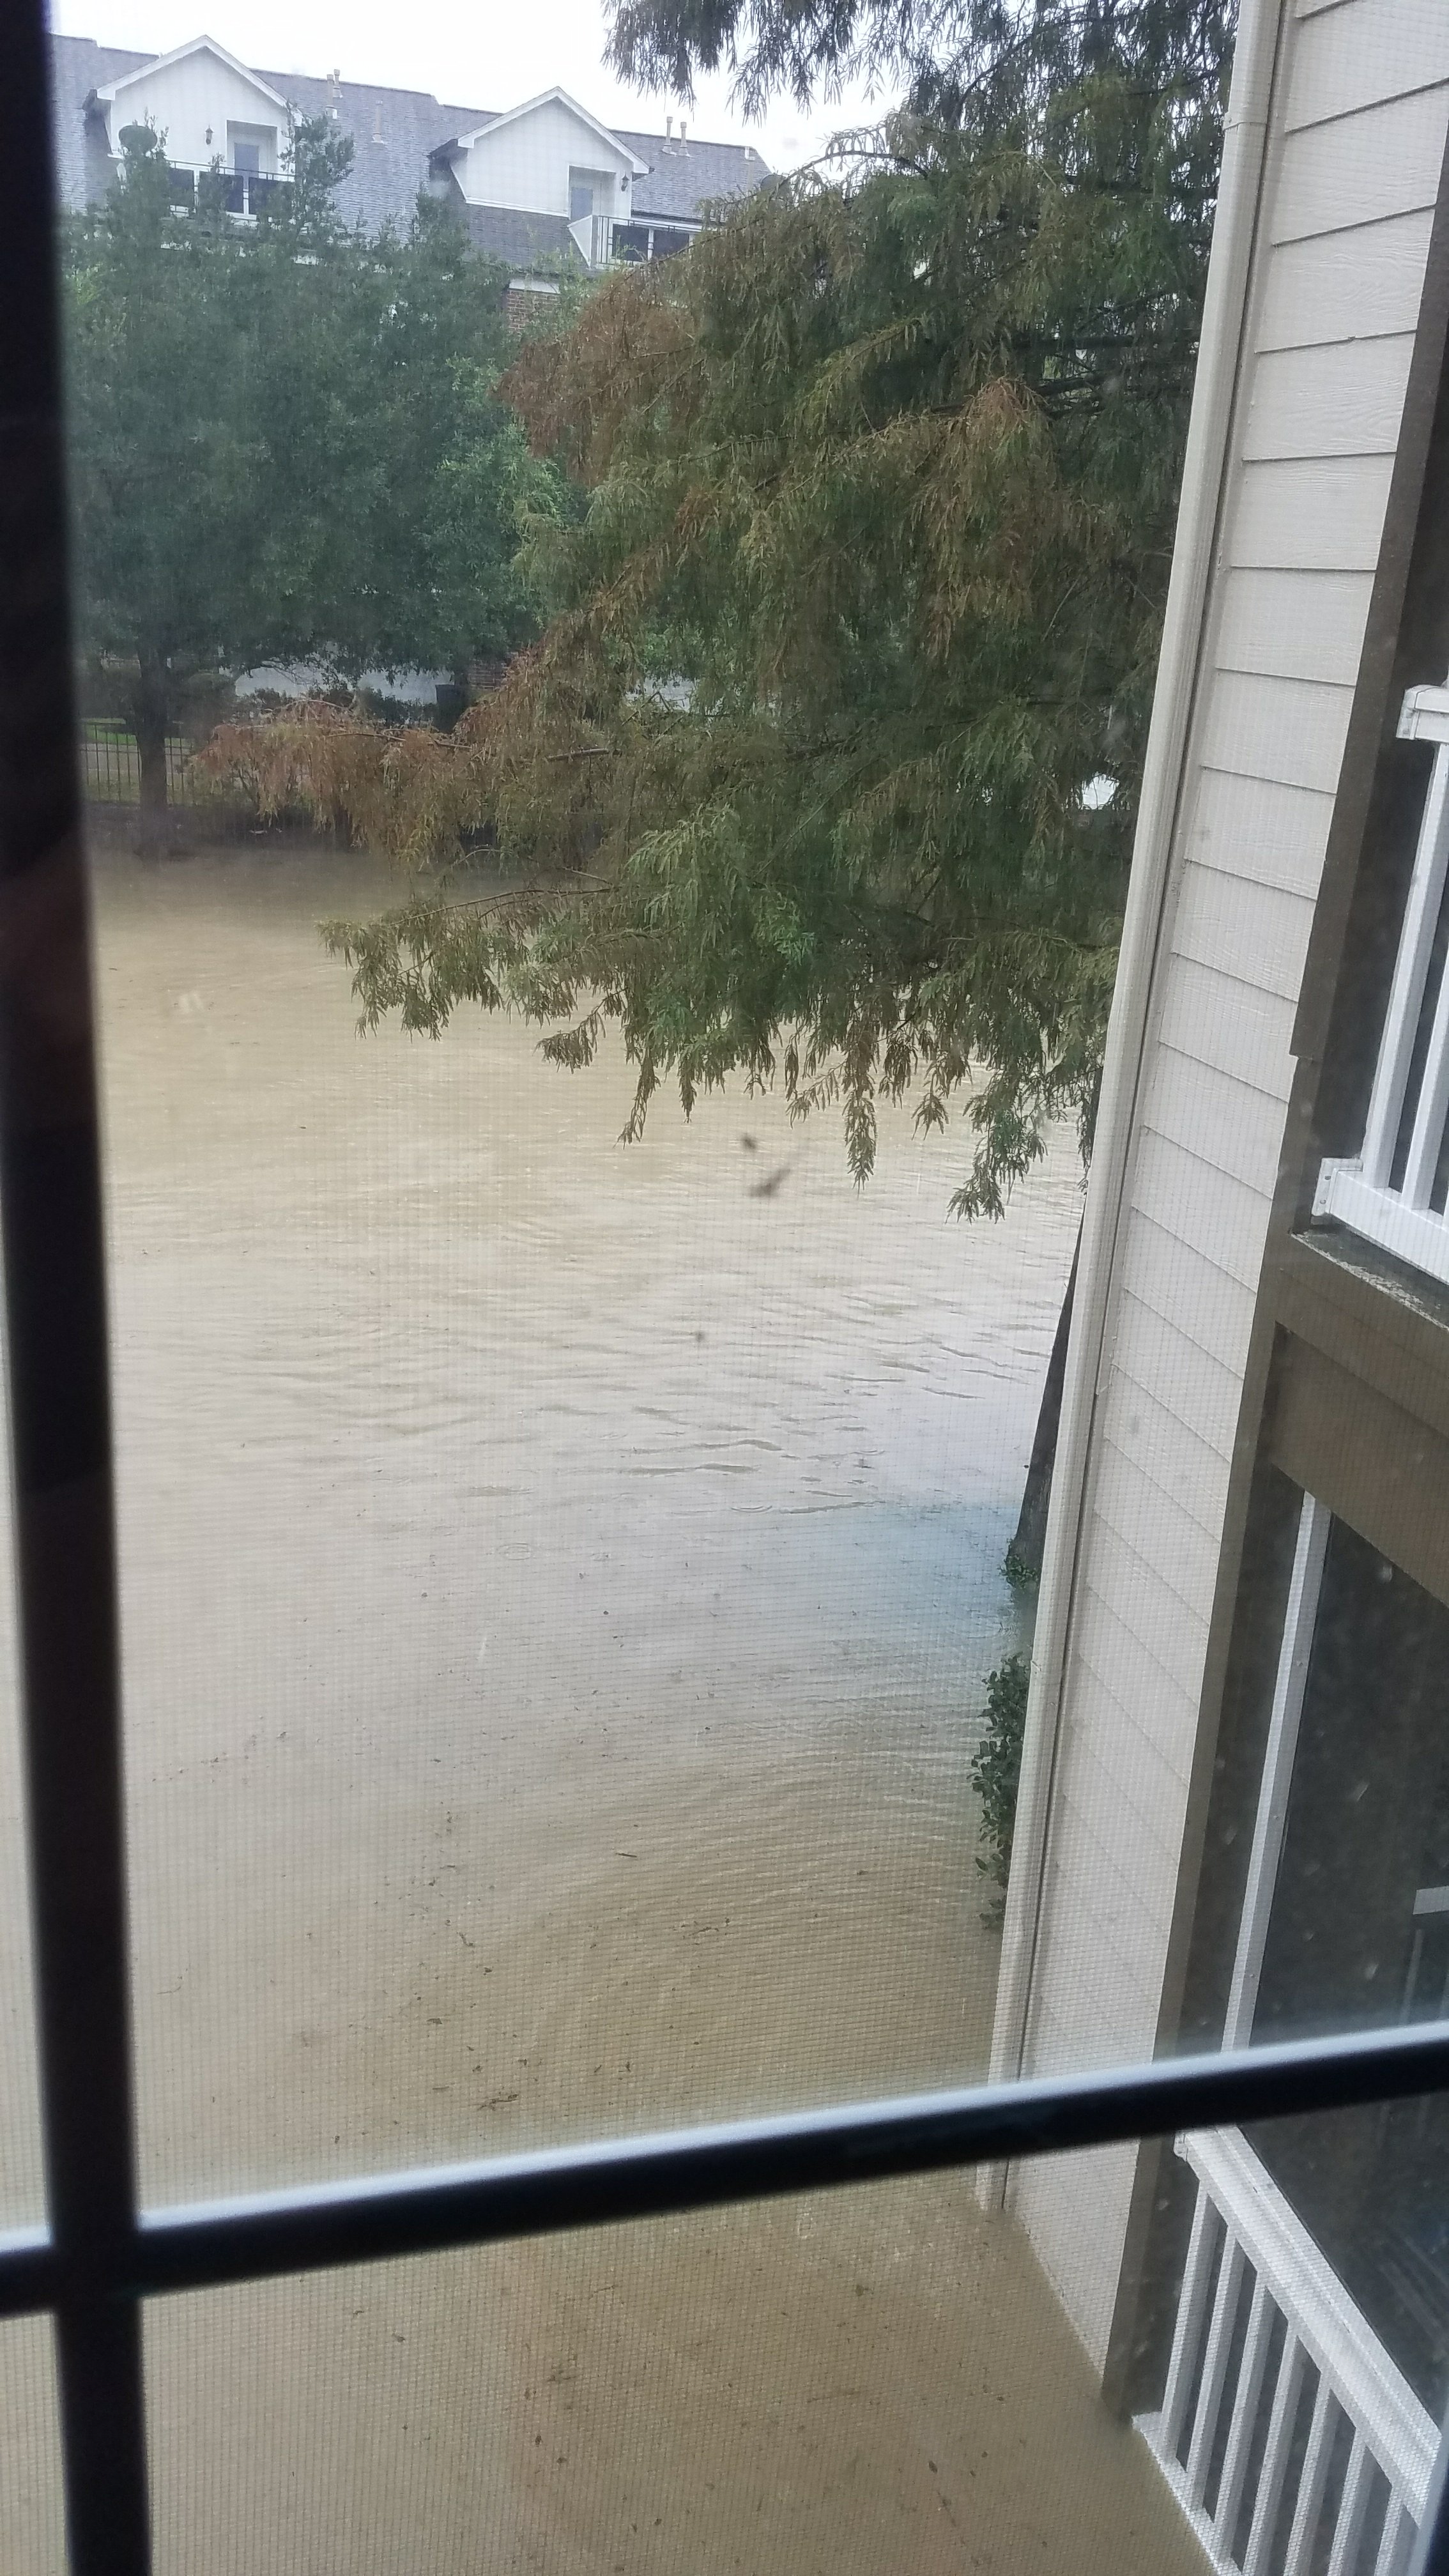 Hurricane Harvey flooding outside the window in Kingwood